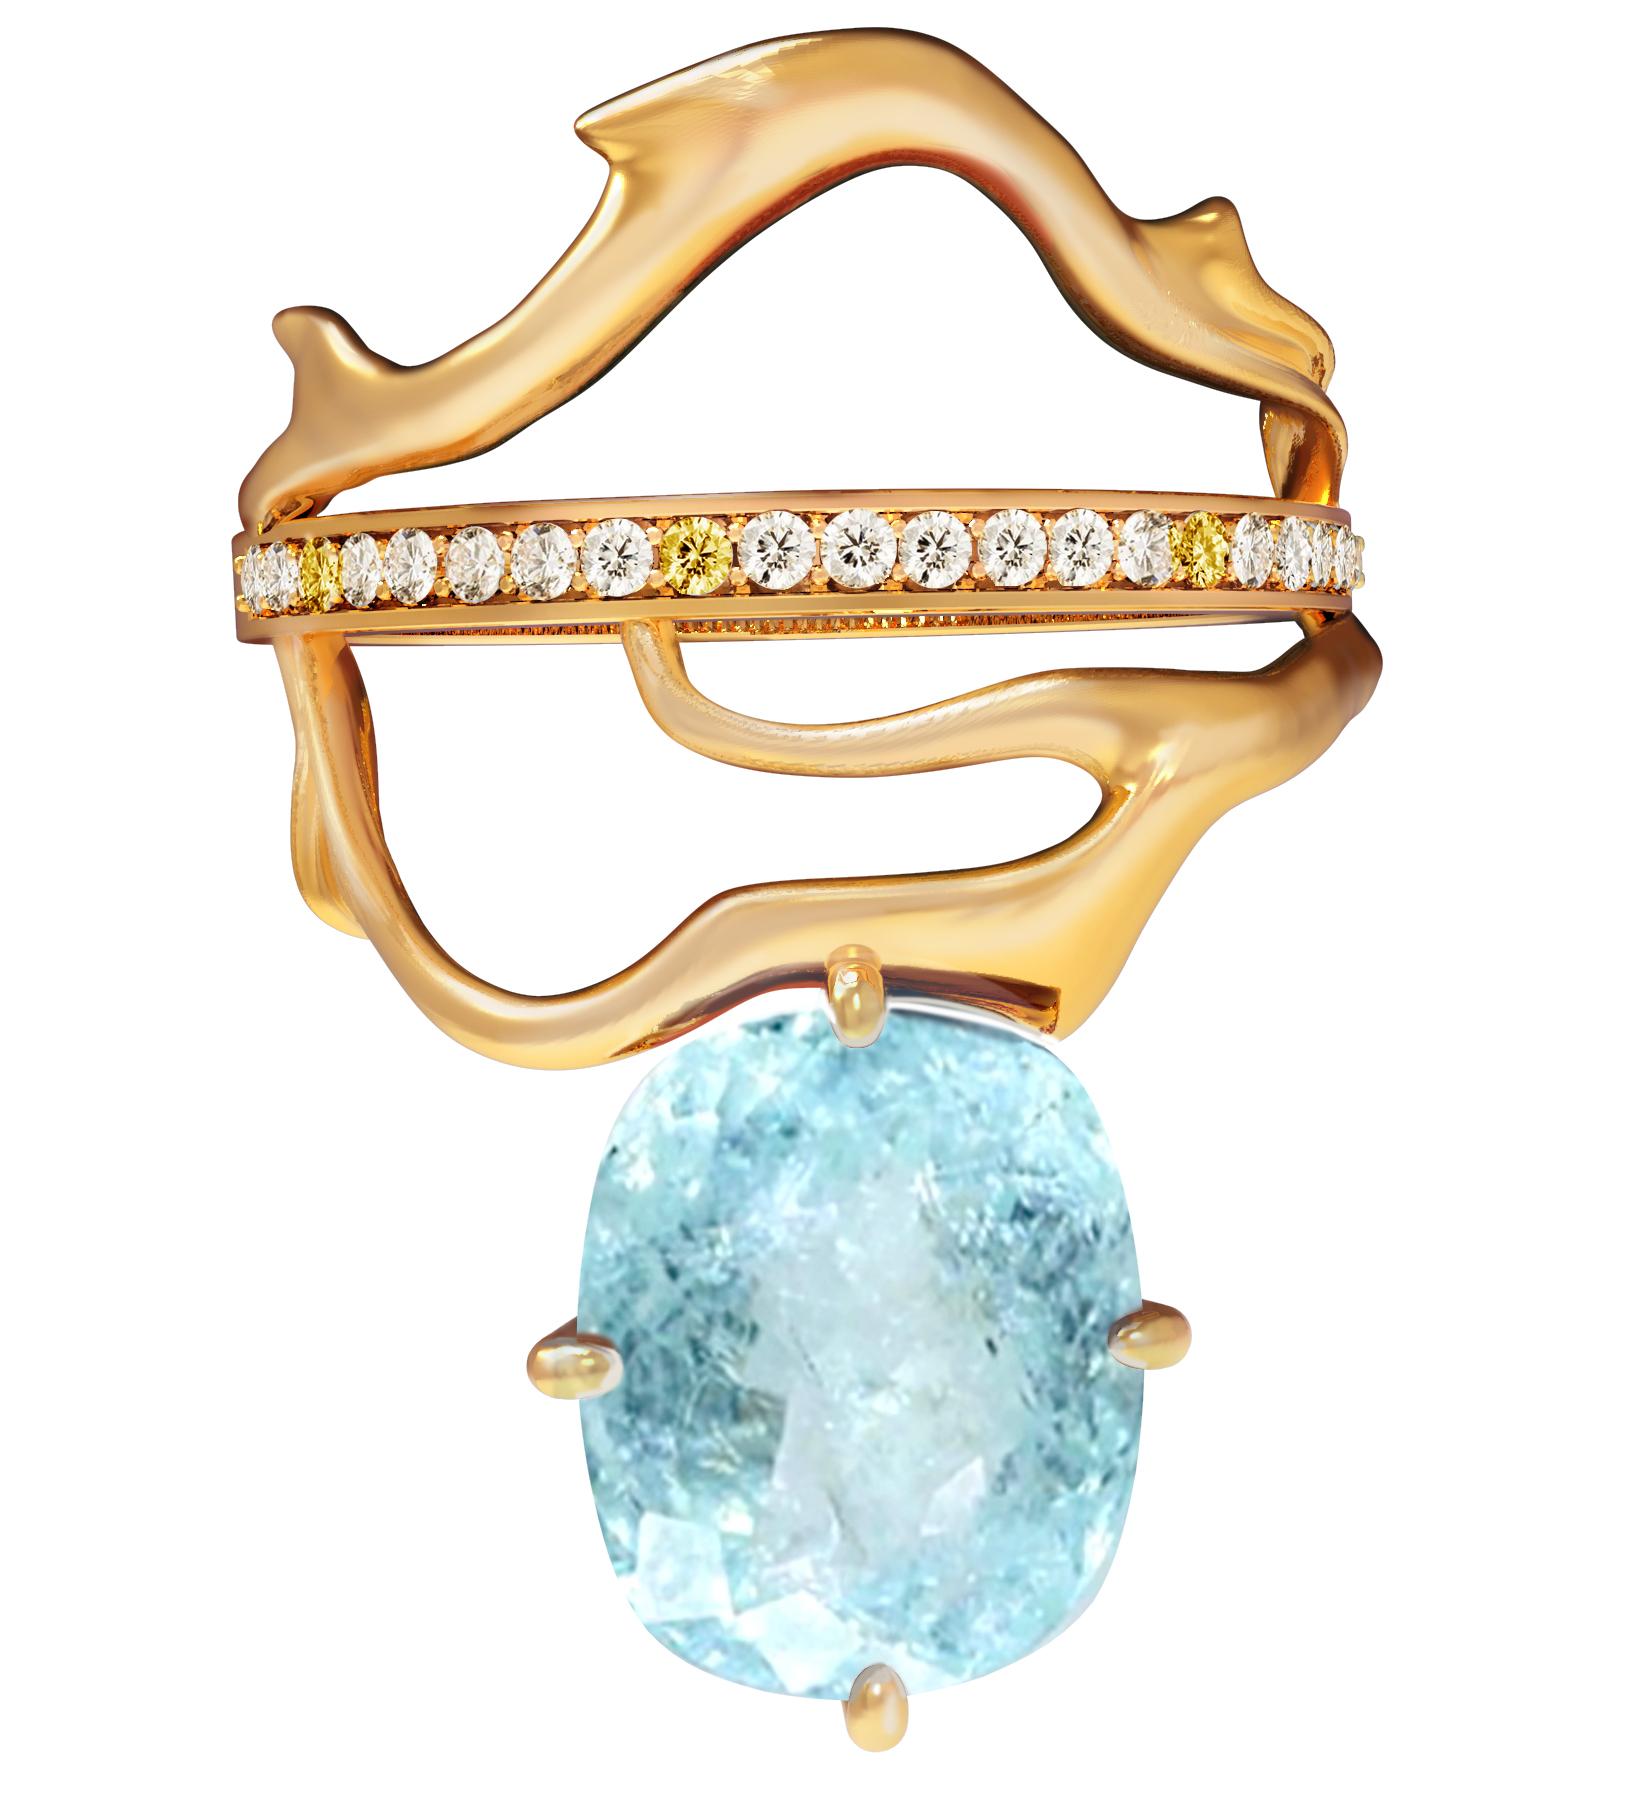 18 Karat Yellow Gold Diamonds Ring with Copper Bearing Paraiba Tourmaline For Sale 5